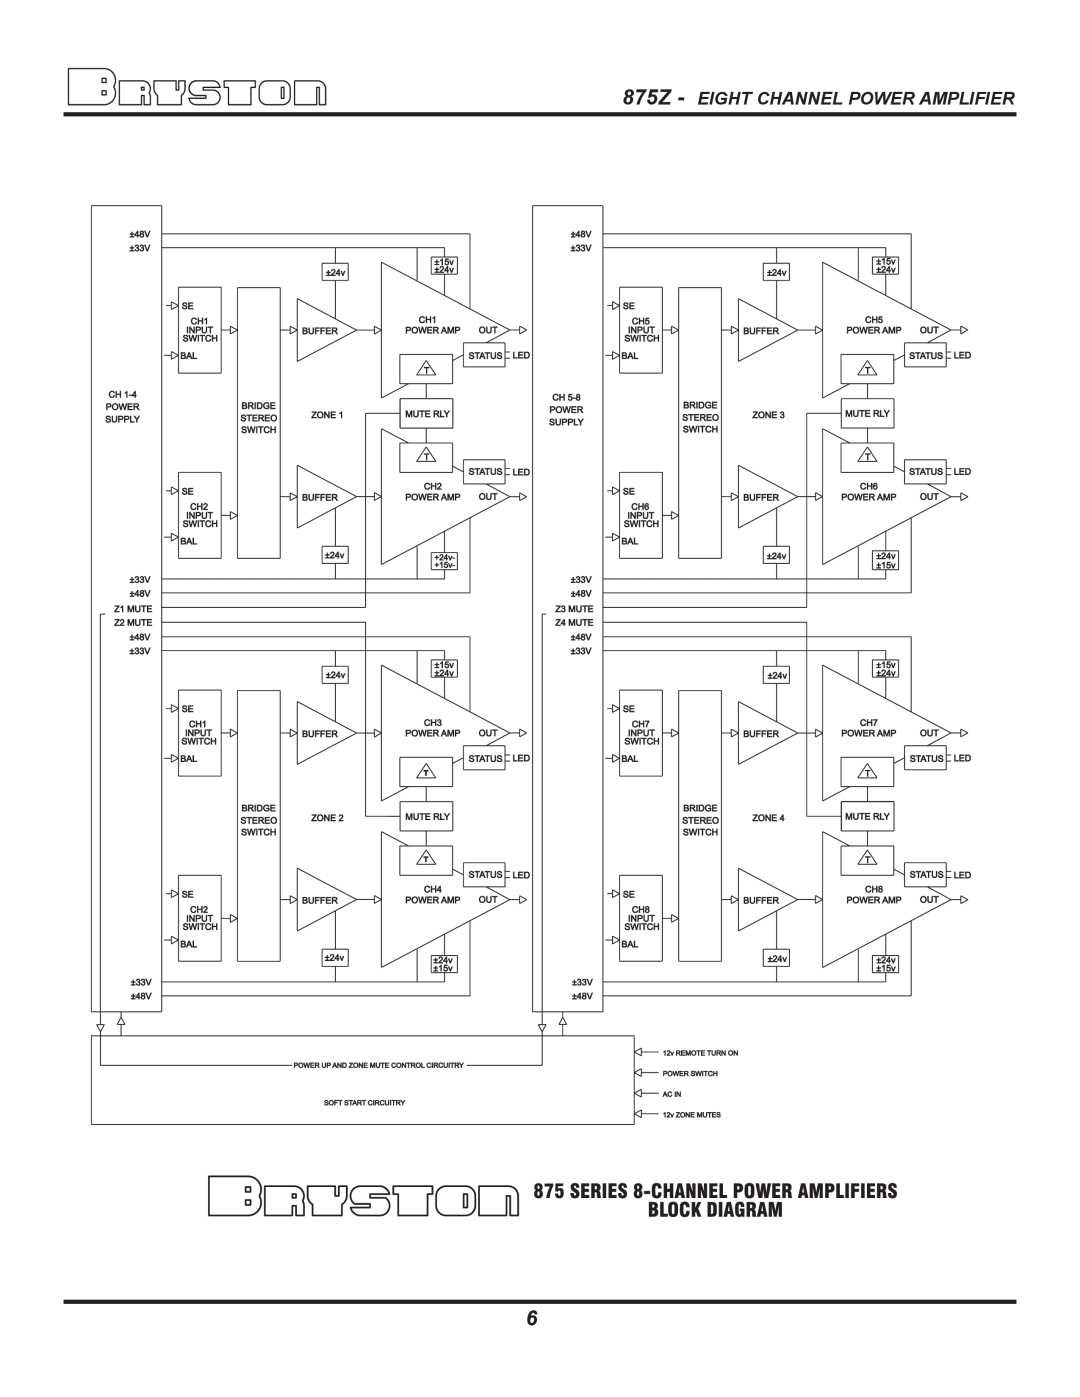 Bryston owner manual 875Z - EIGHT CHANNEL POWER AMPLIFIER 